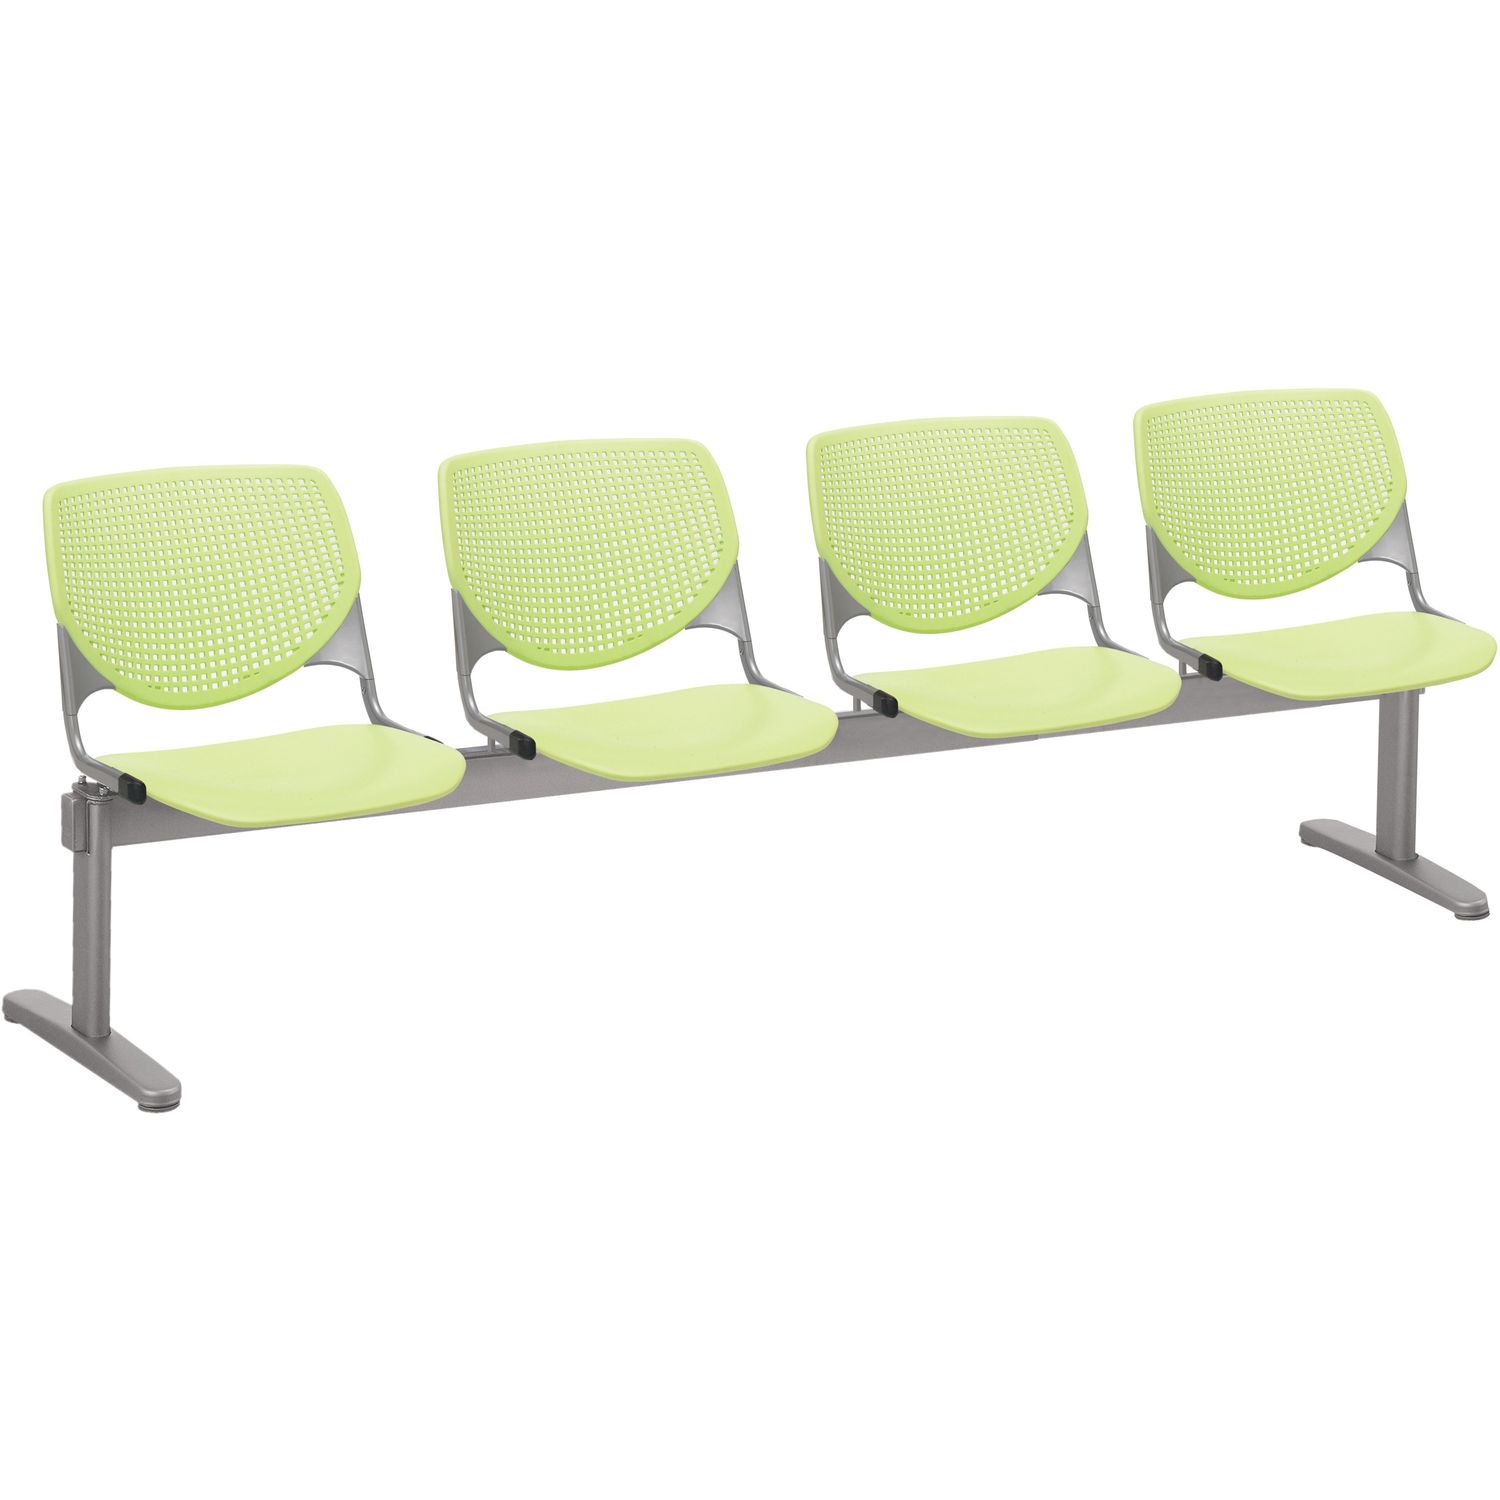 Kool 4 Seat Beam Chair Lime Green Polypropylene Seat, Lime Green Polypropylene, Aluminum Alloy Back, Powder Coated Silver Tubular Steel Frame, 1 Each